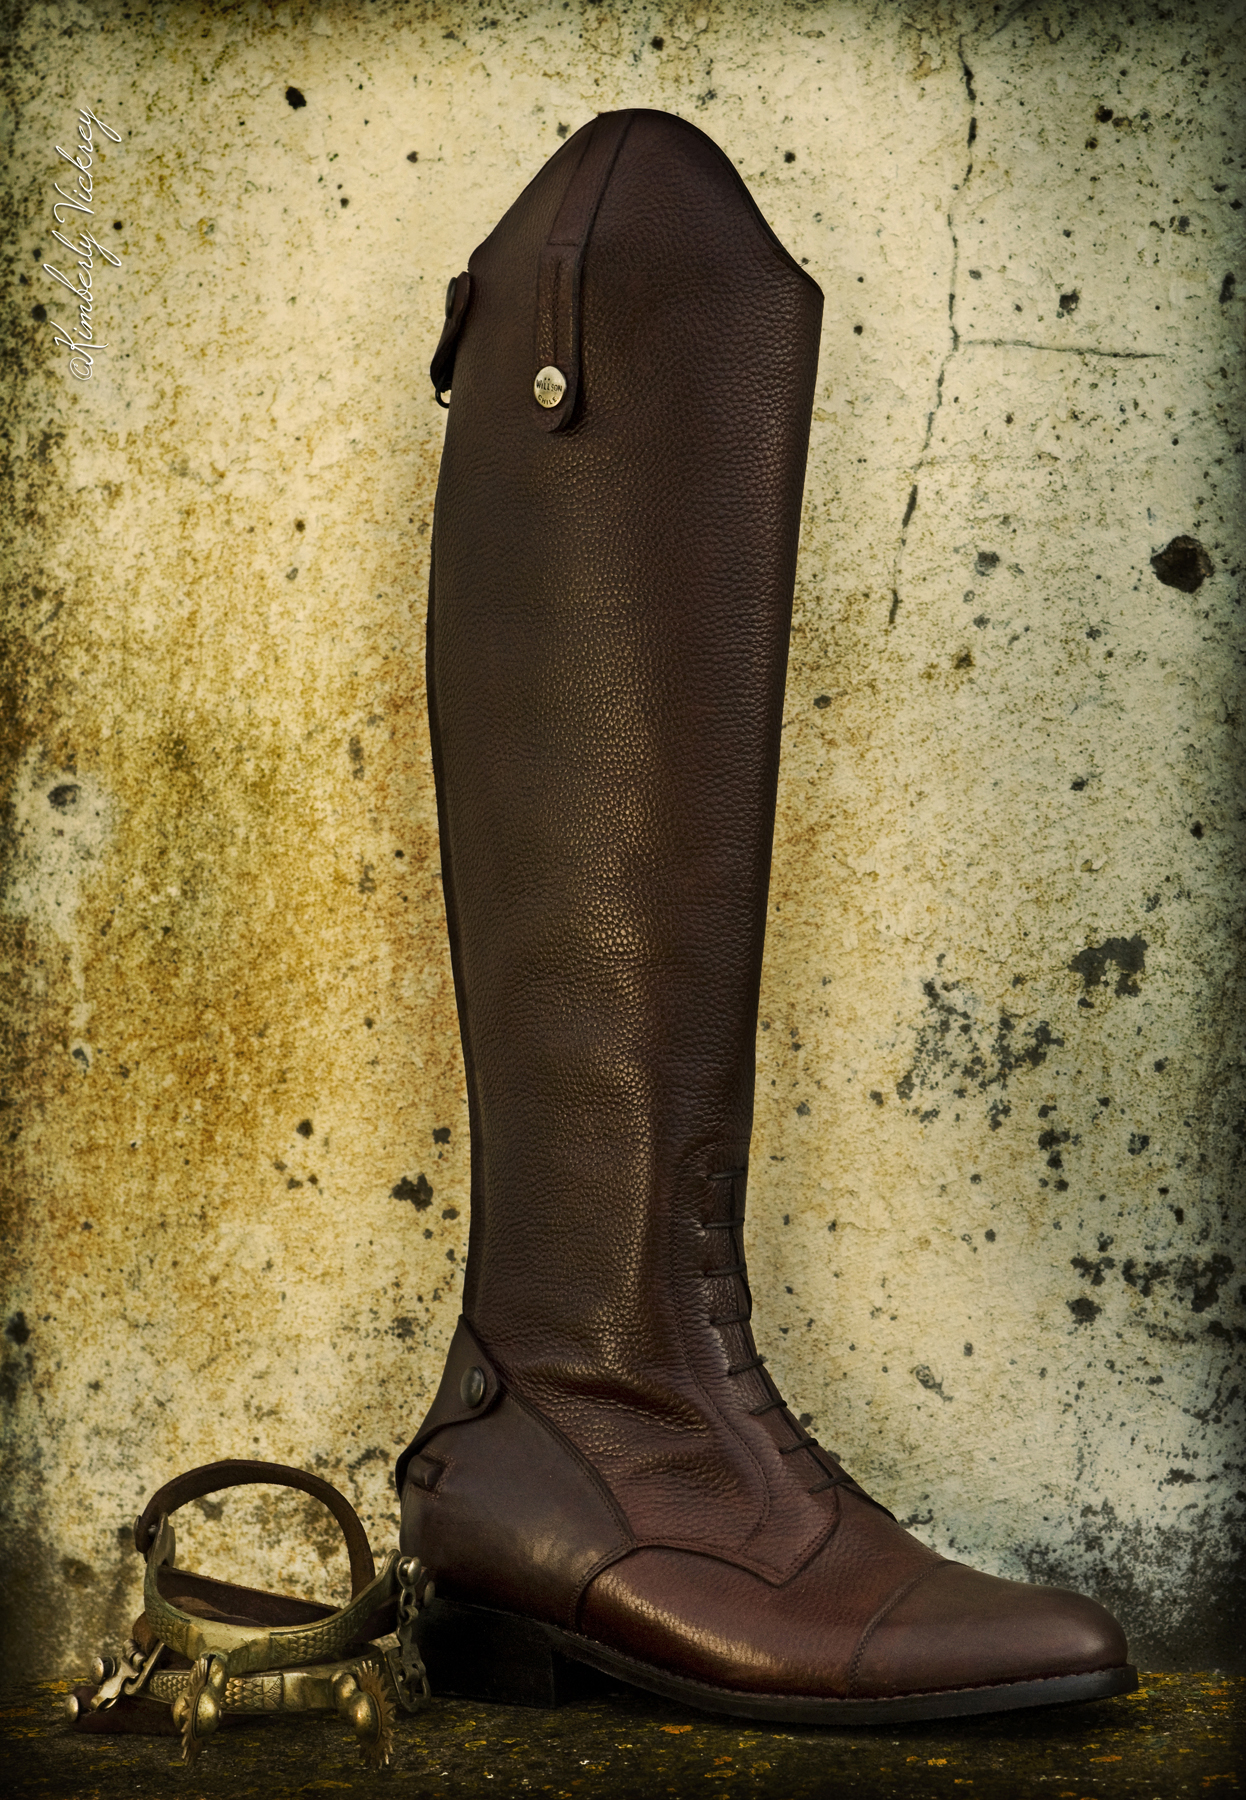 Kimberley Boyd Vickrey, "Wilson's Boot, 2010," photograph.